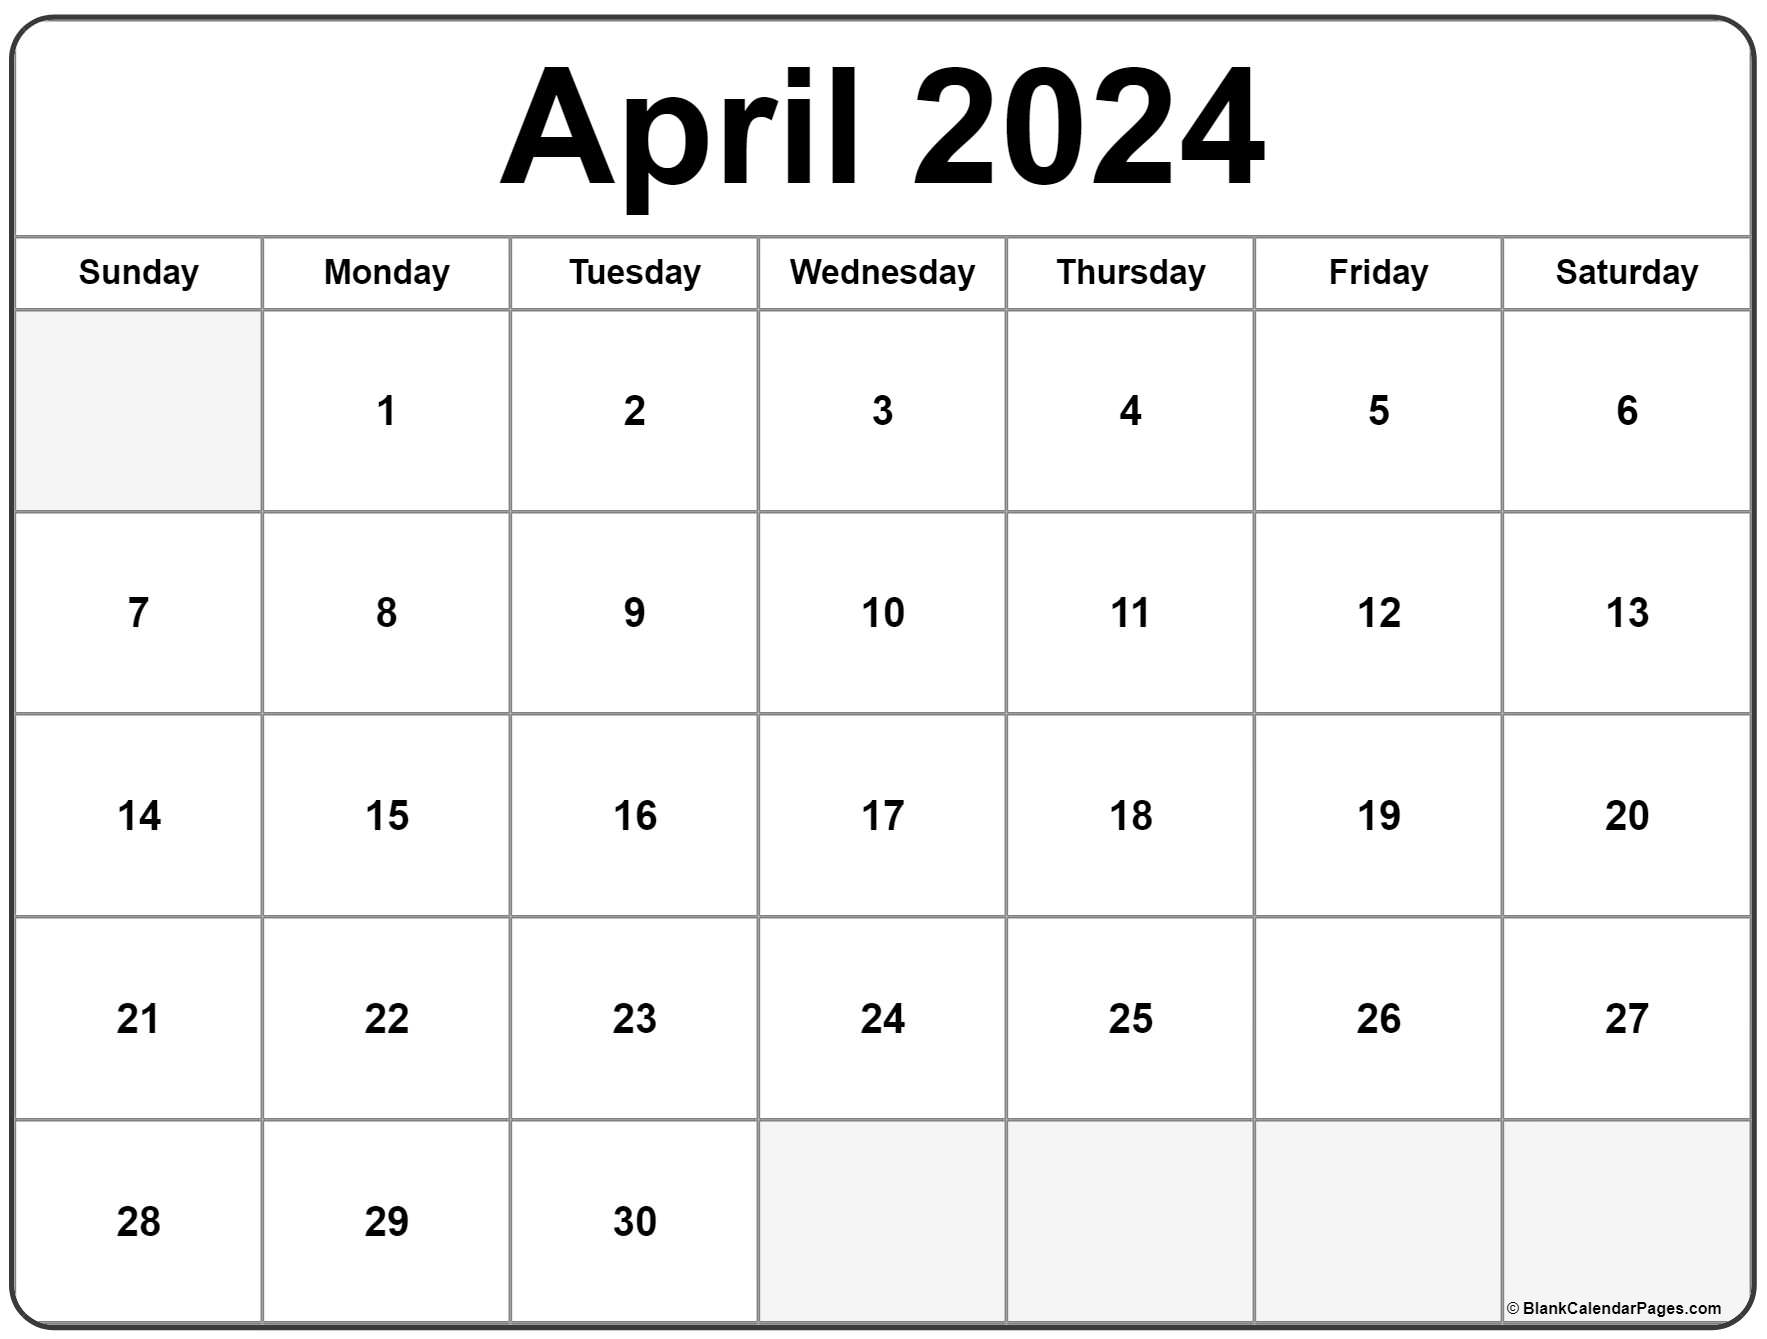 Printable Calendar 2022 April April 2022 Calendar | Free Printable Calendar Templates